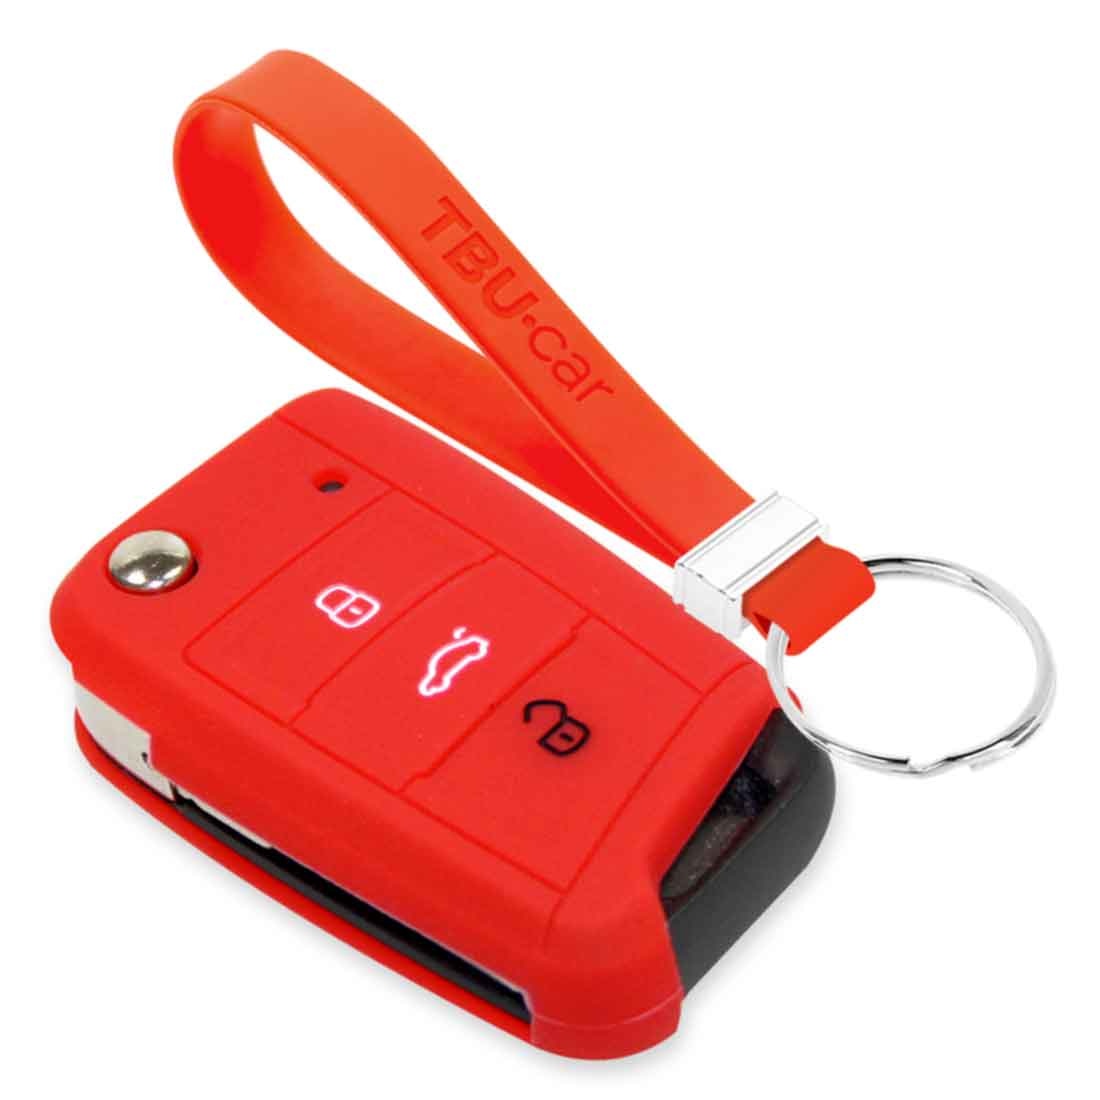 TBU car TBU car Autoschlüssel Hülle kompatibel mit Skoda 3 Tasten - Schutzhülle aus Silikon - Auto Schlüsselhülle Cover in Rot